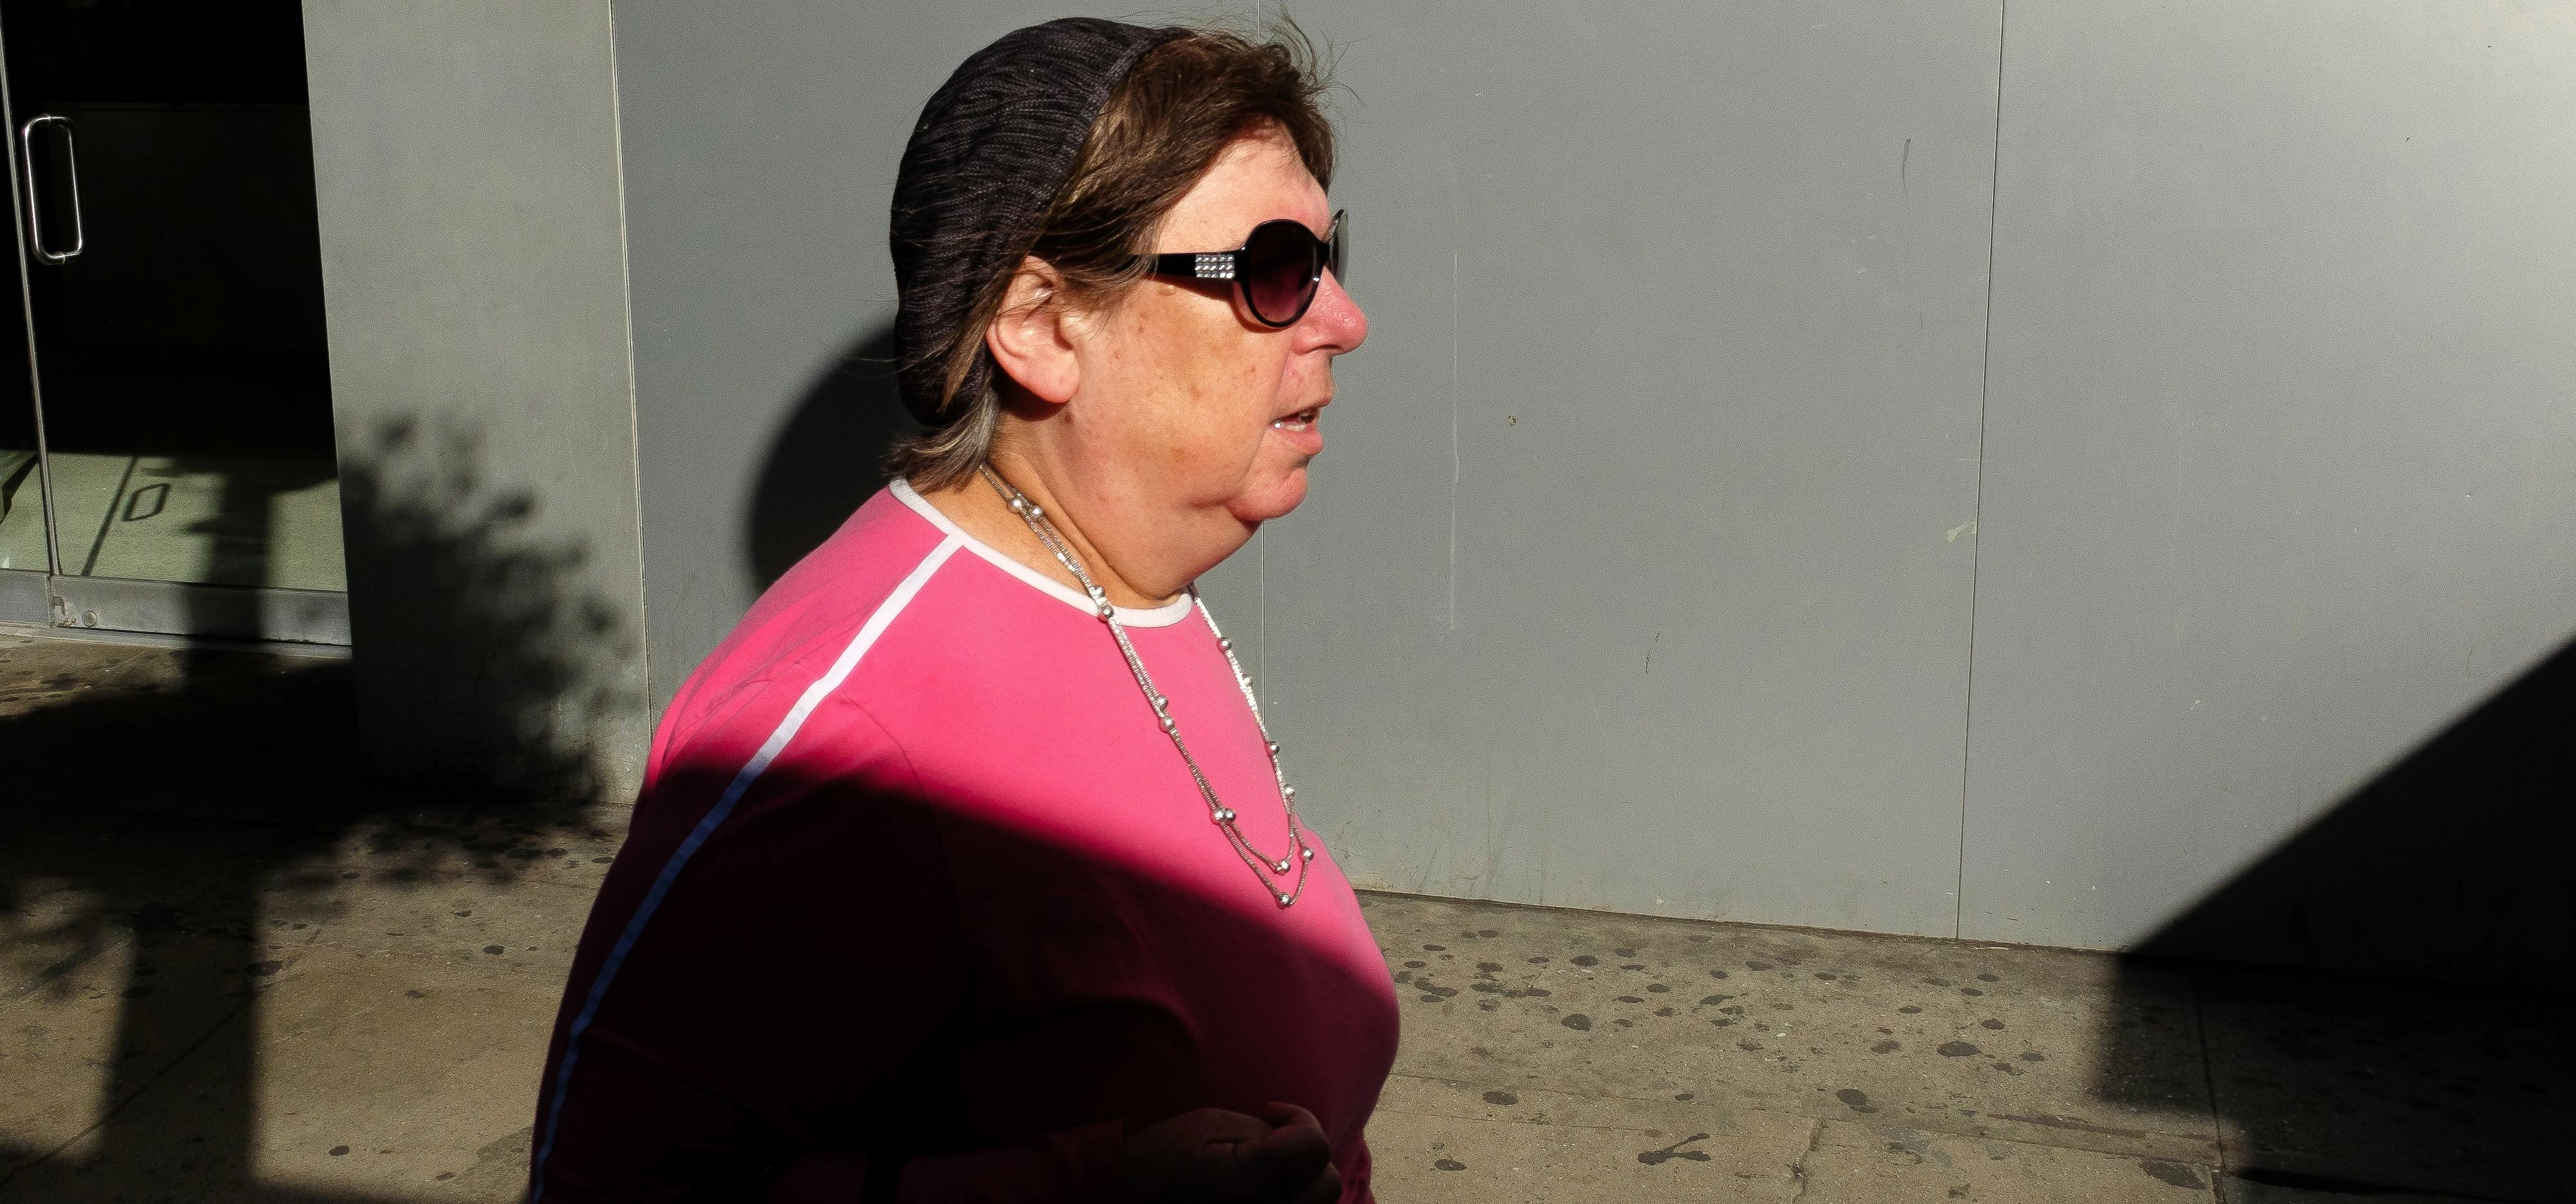 New York City Street Scenes - Woman in Pink Shirt Walking on Sidewalk